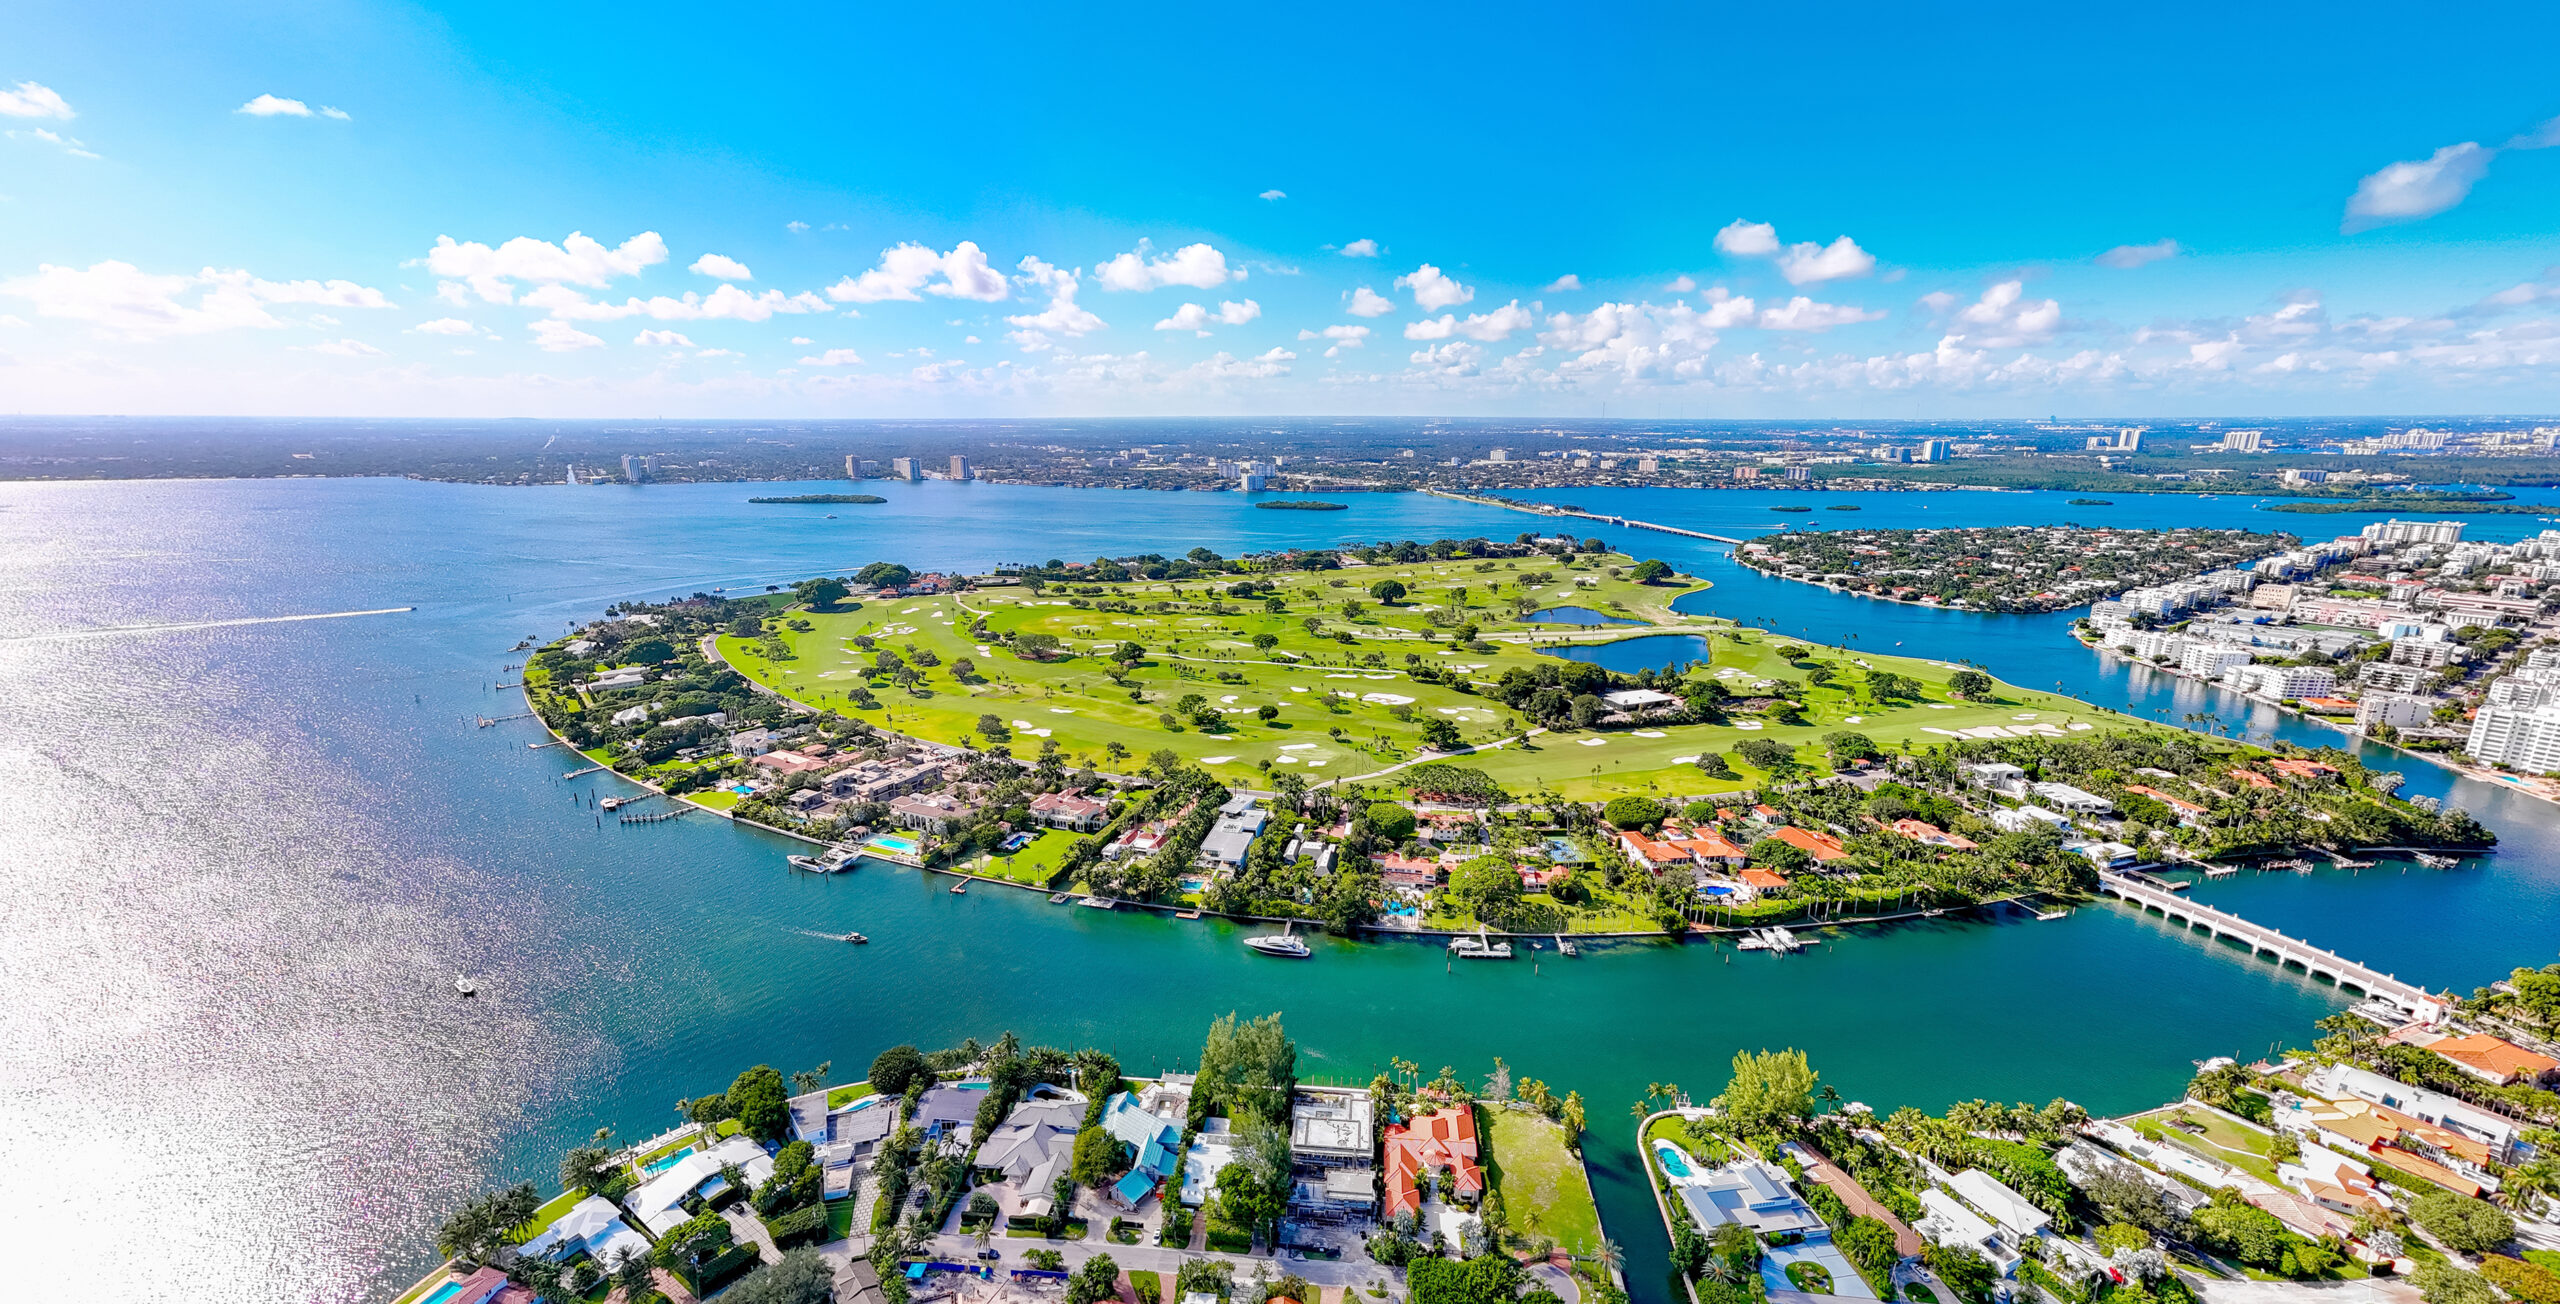 Ken Griffin’s Citadel to Soar with $1 Billion Headquarters Tower in Miami’s Brickell Neighborhood